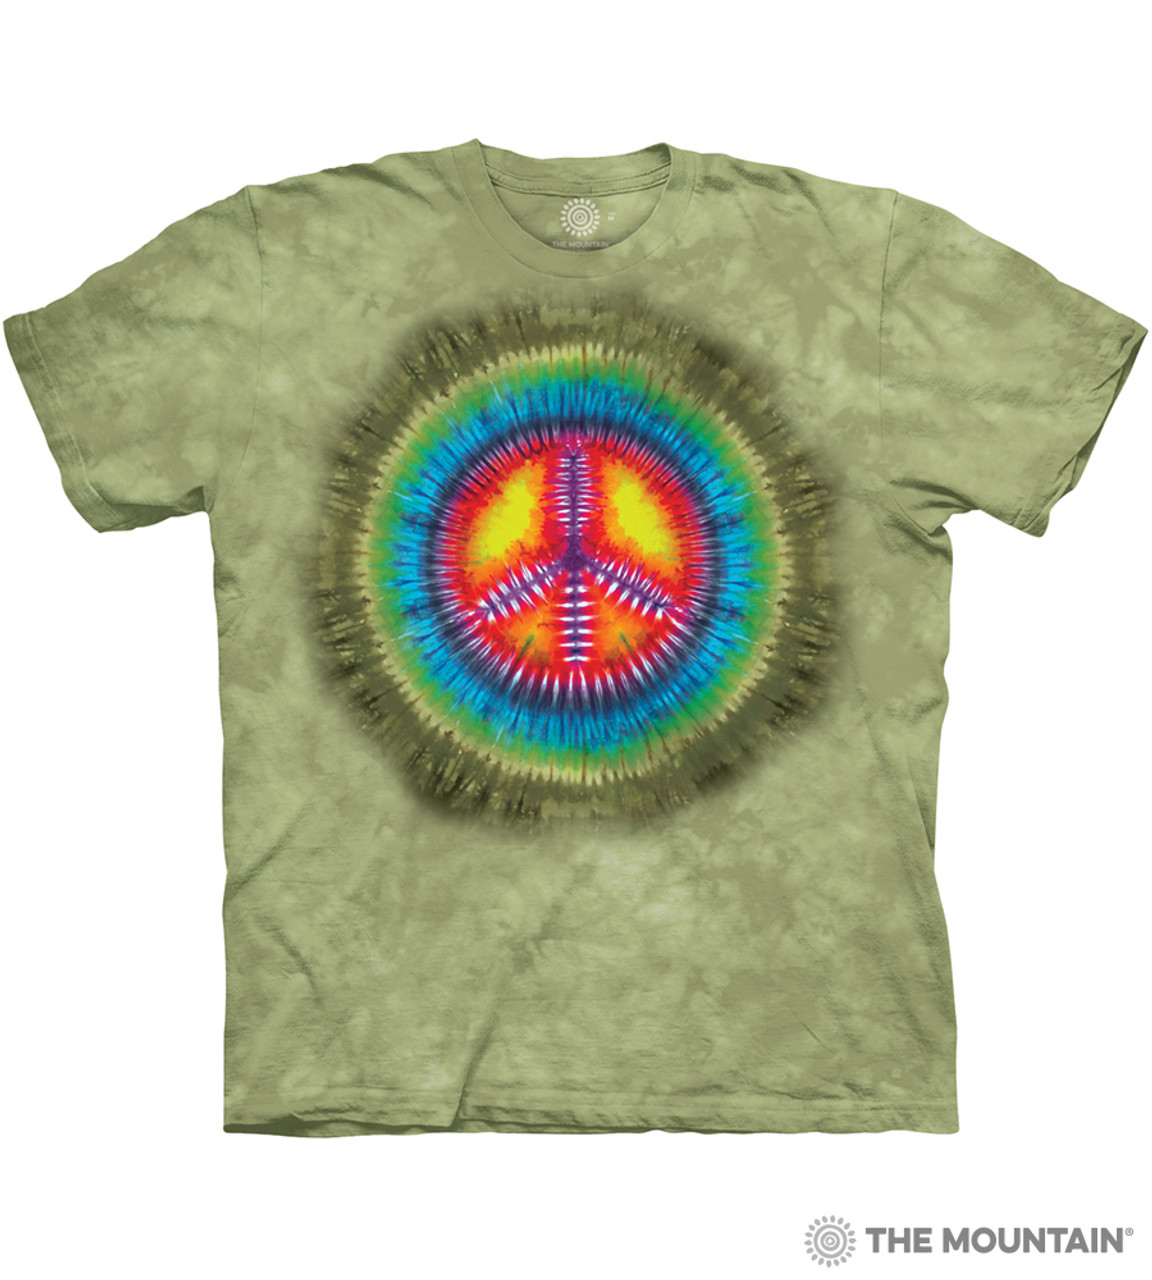 Youth Tie Dye Shirt with Logo — Flat Mountain Farm